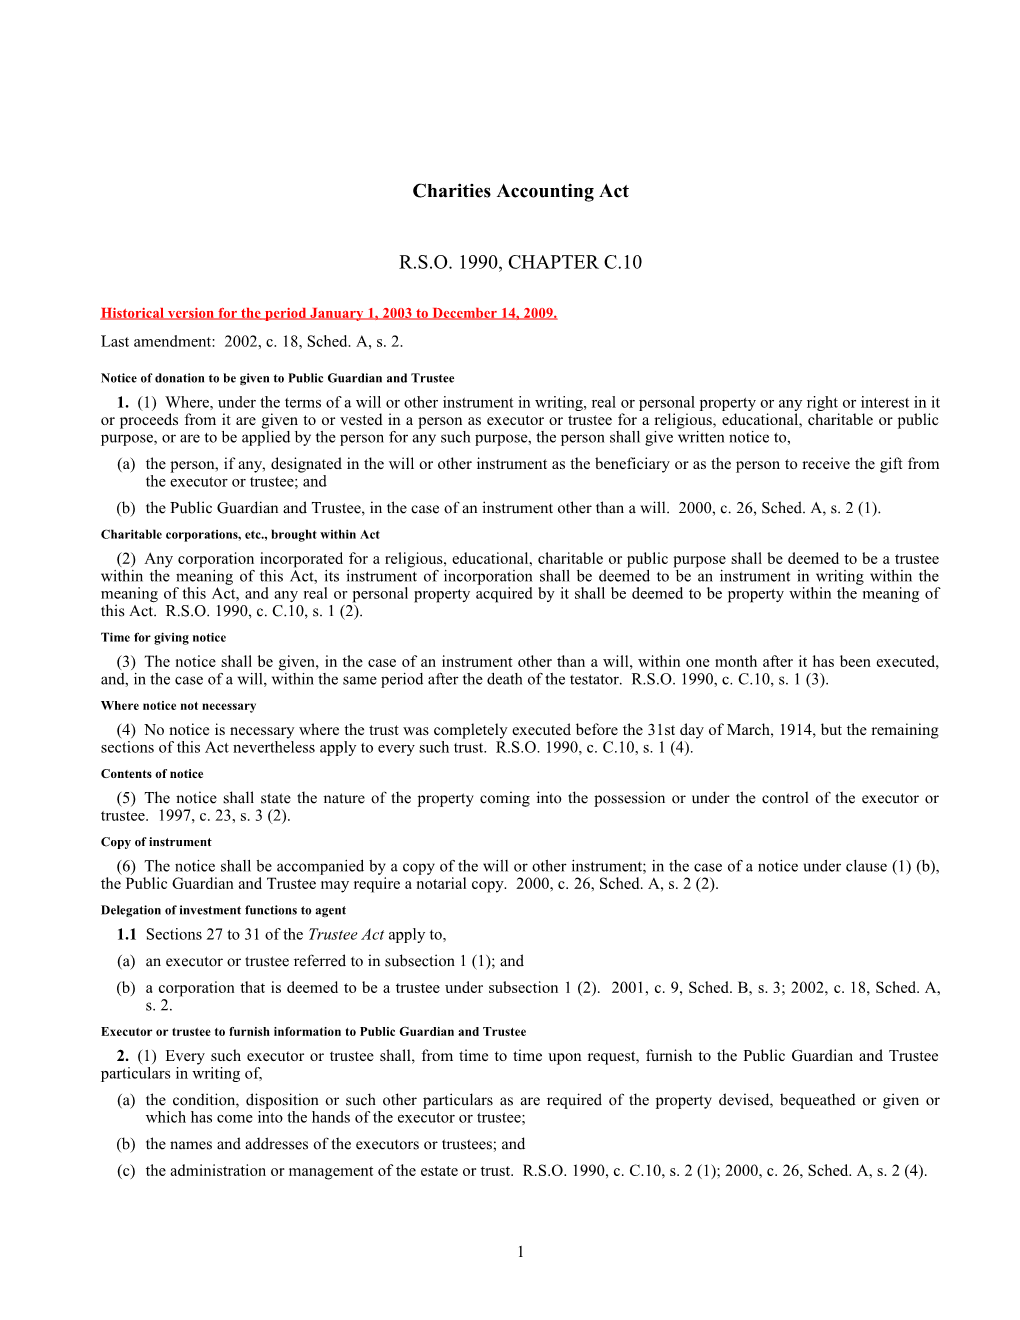 Charities Accounting Act, R.S.O. 1990, C. C.10